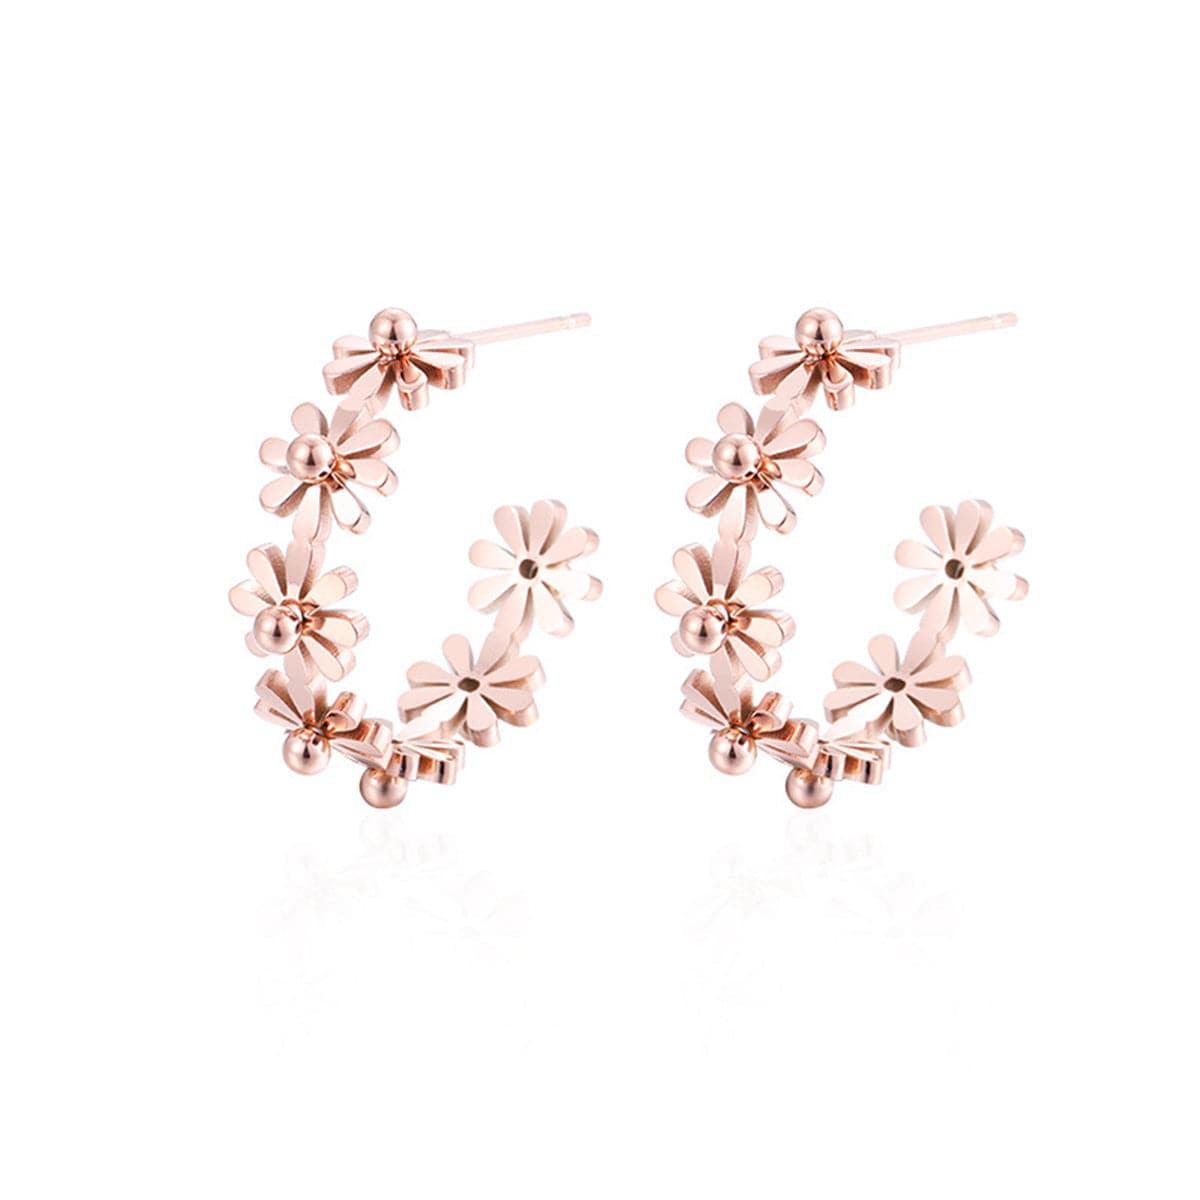 18K Rose Gold-Plated Daisy Hoop Earrings